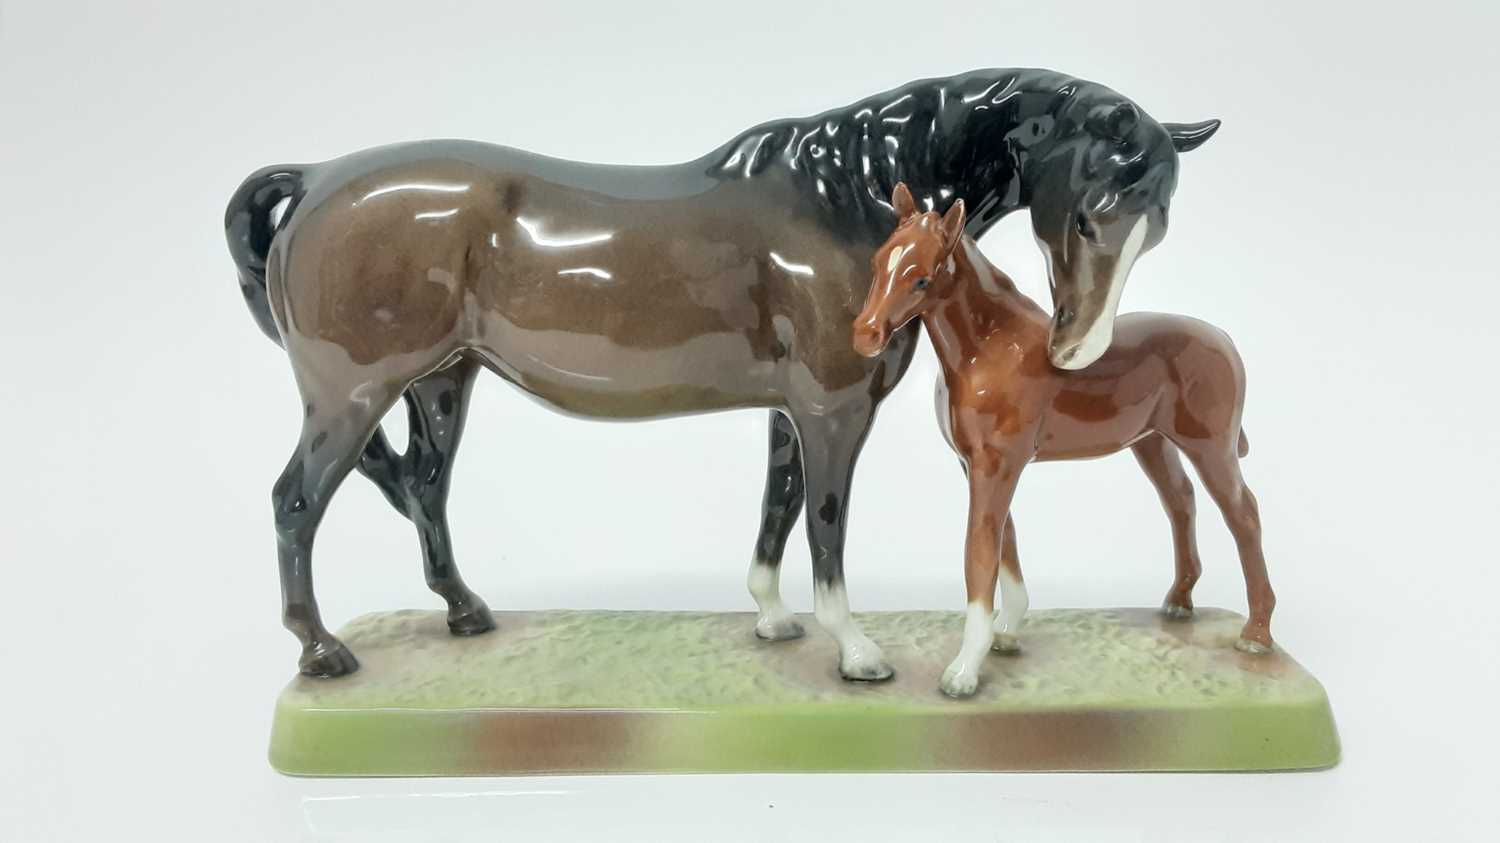 Lot 35 - Beswick Mare and Foal, model no. 1811, designed by Arthur Gredington, 16cm high